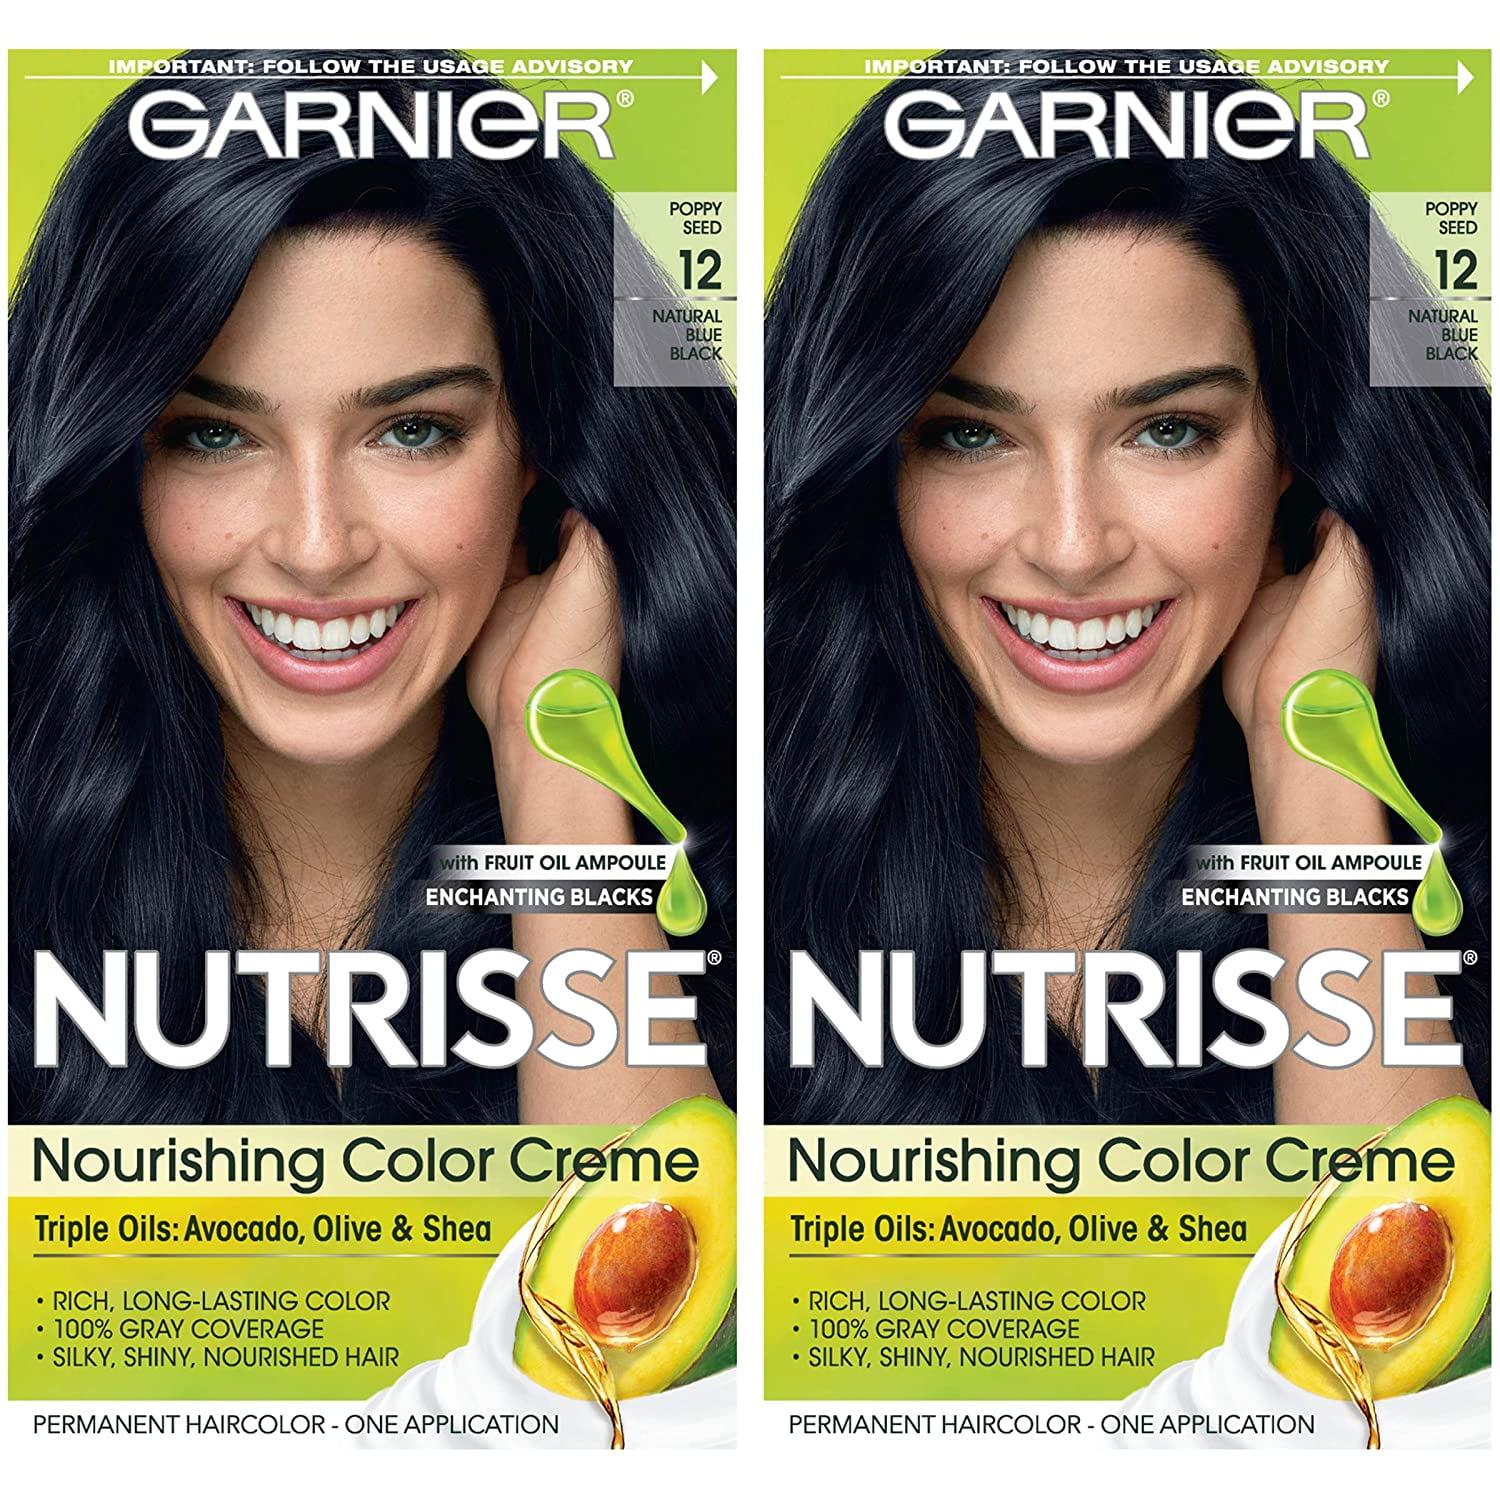 Garnier Hair Color Nutrisse Nourishing Creme, 12 Natural Blue Black (Poppy  Seed) Permanent Hair Dye, 2 Count (Packaging May Vary) 